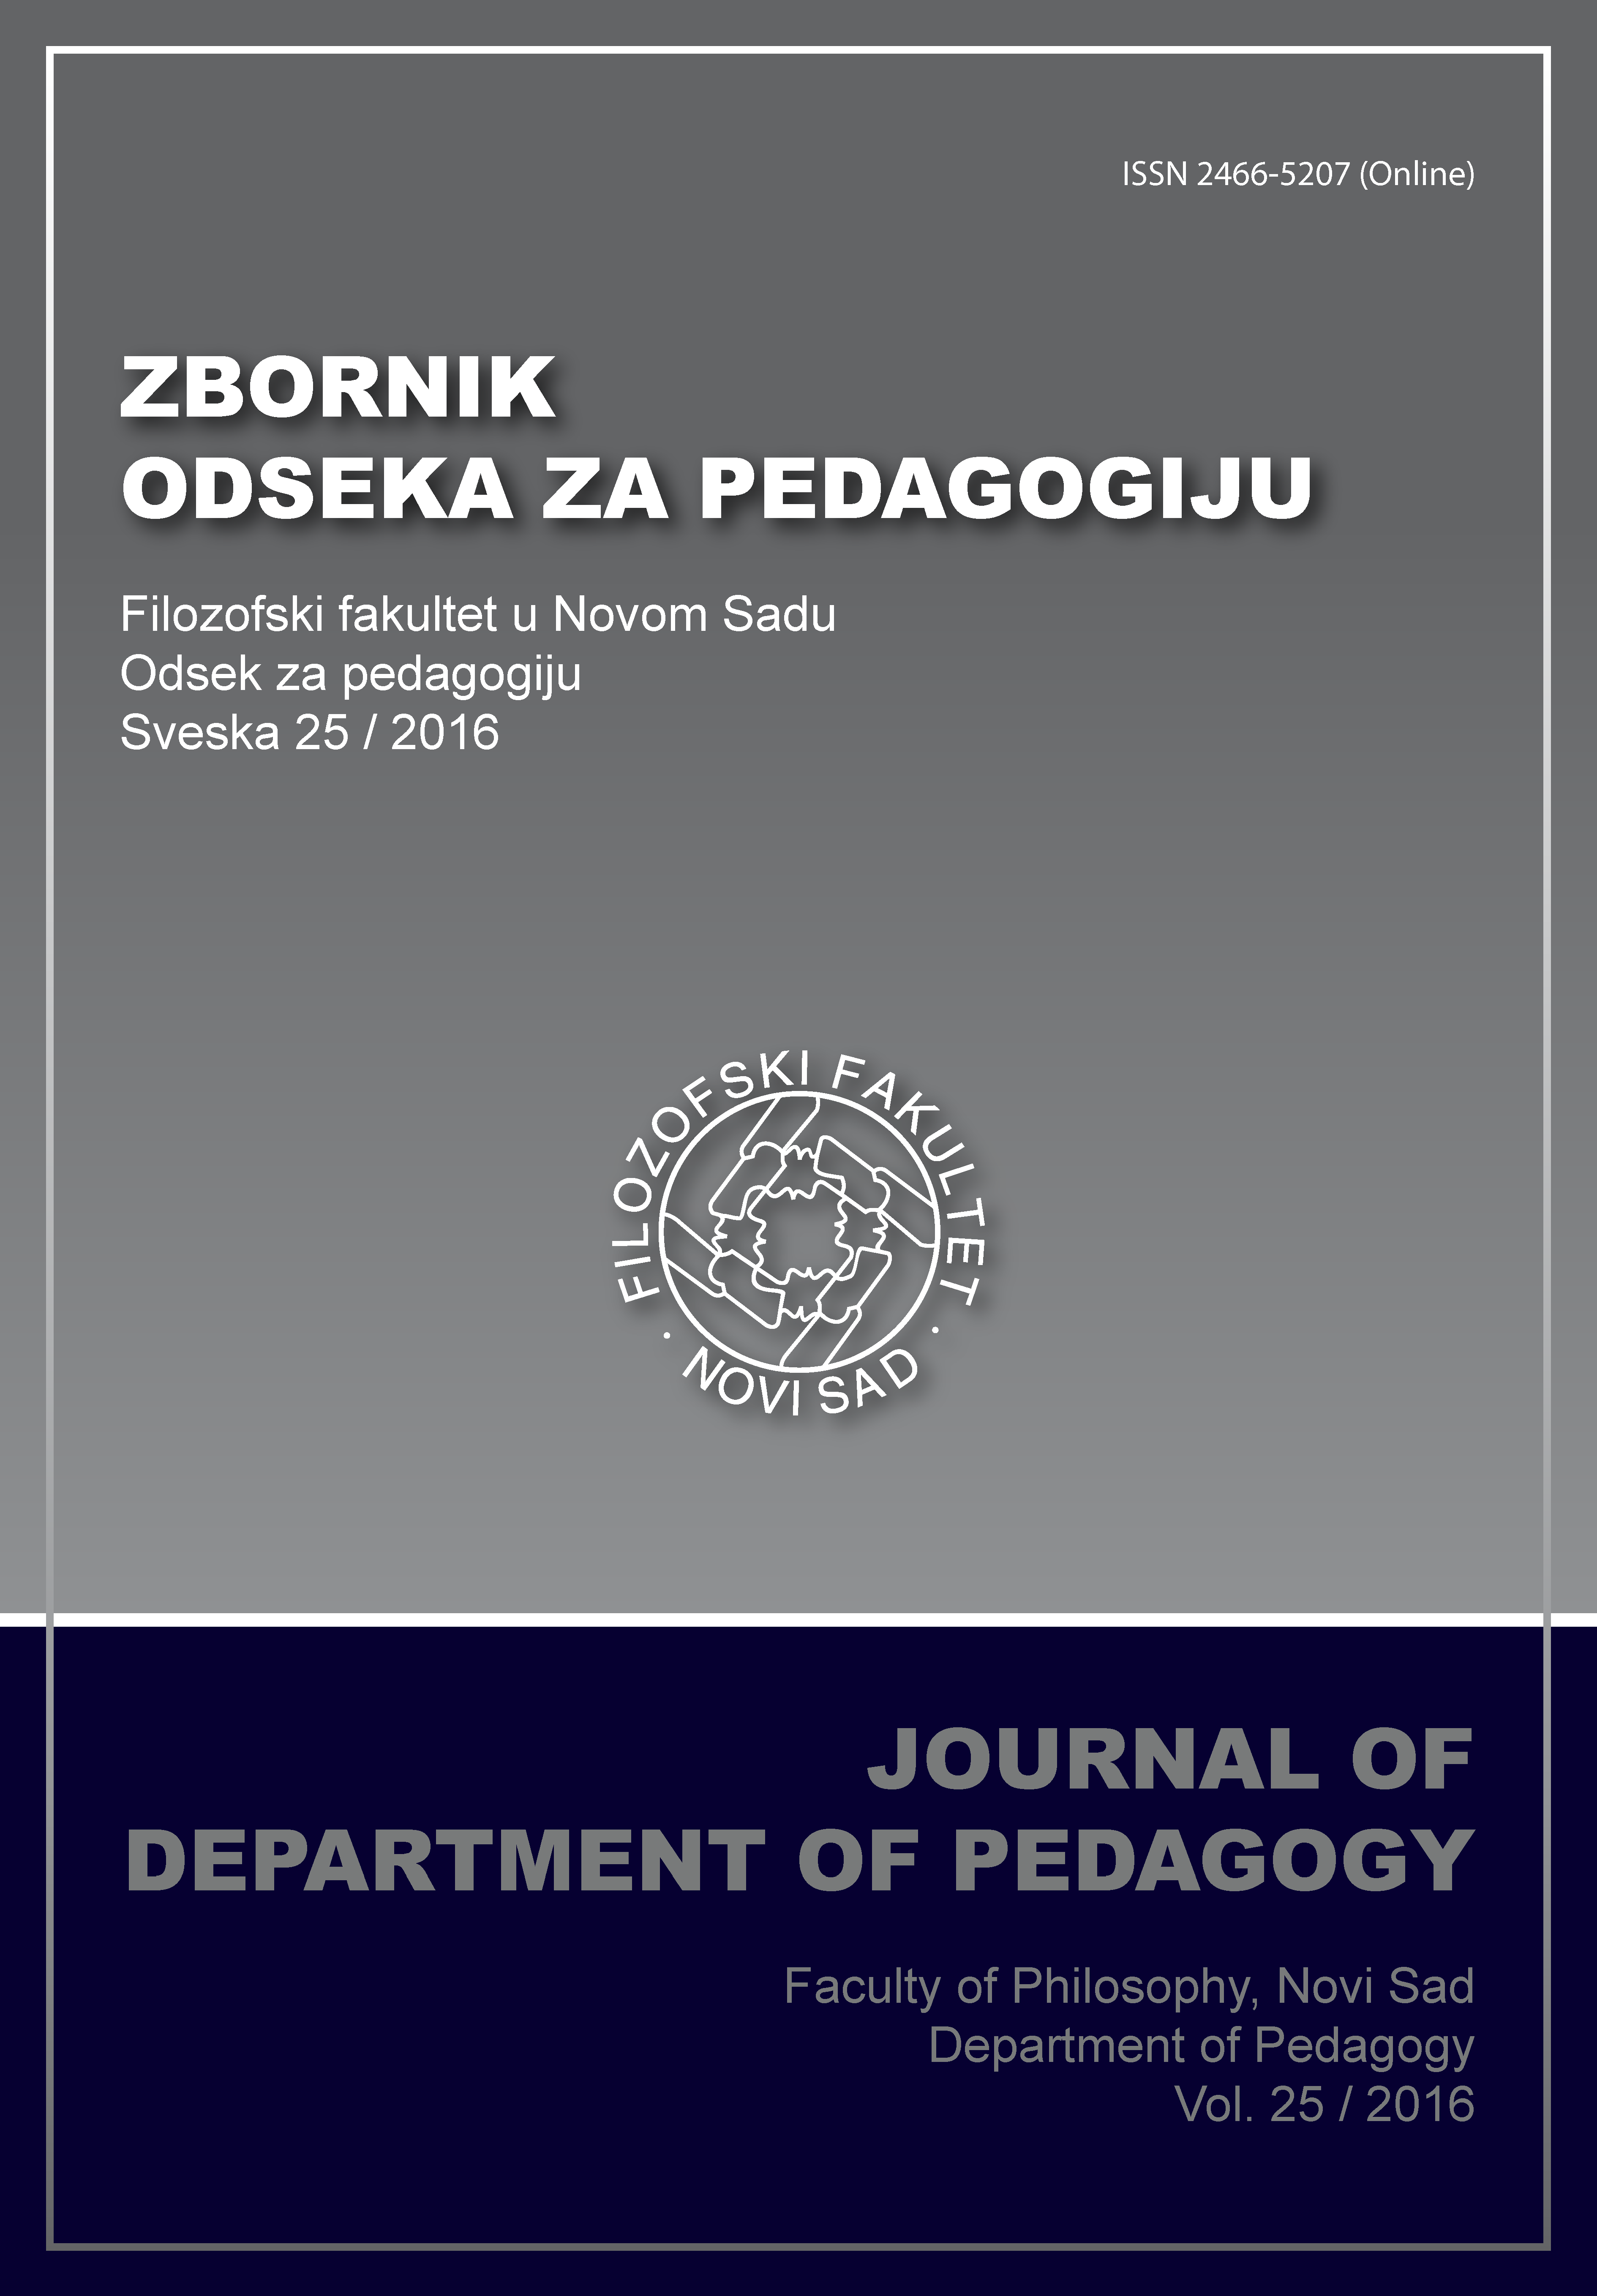 Journal of Department of Pedagogy